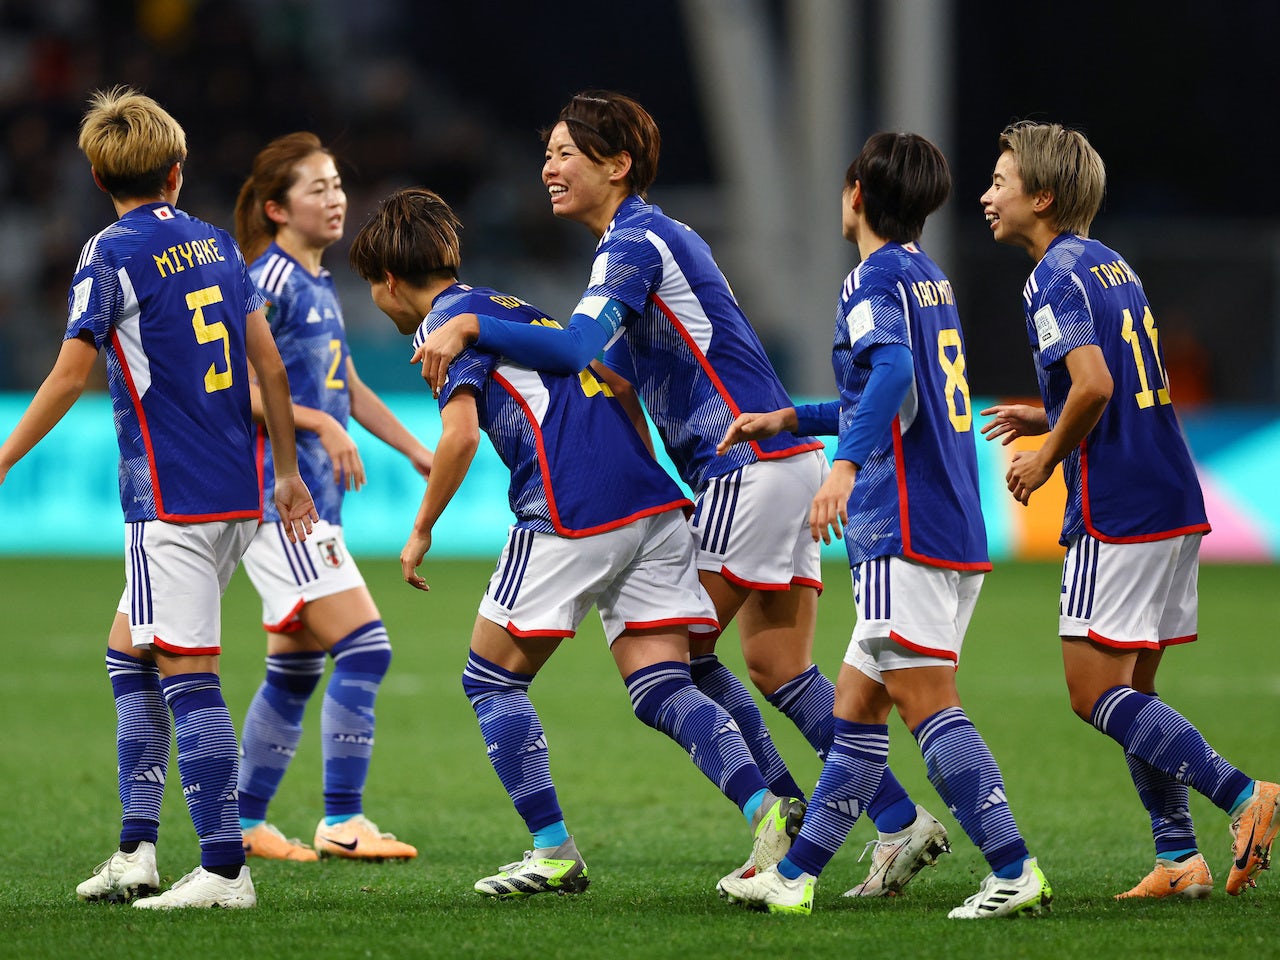 Japan Team News - Soccer